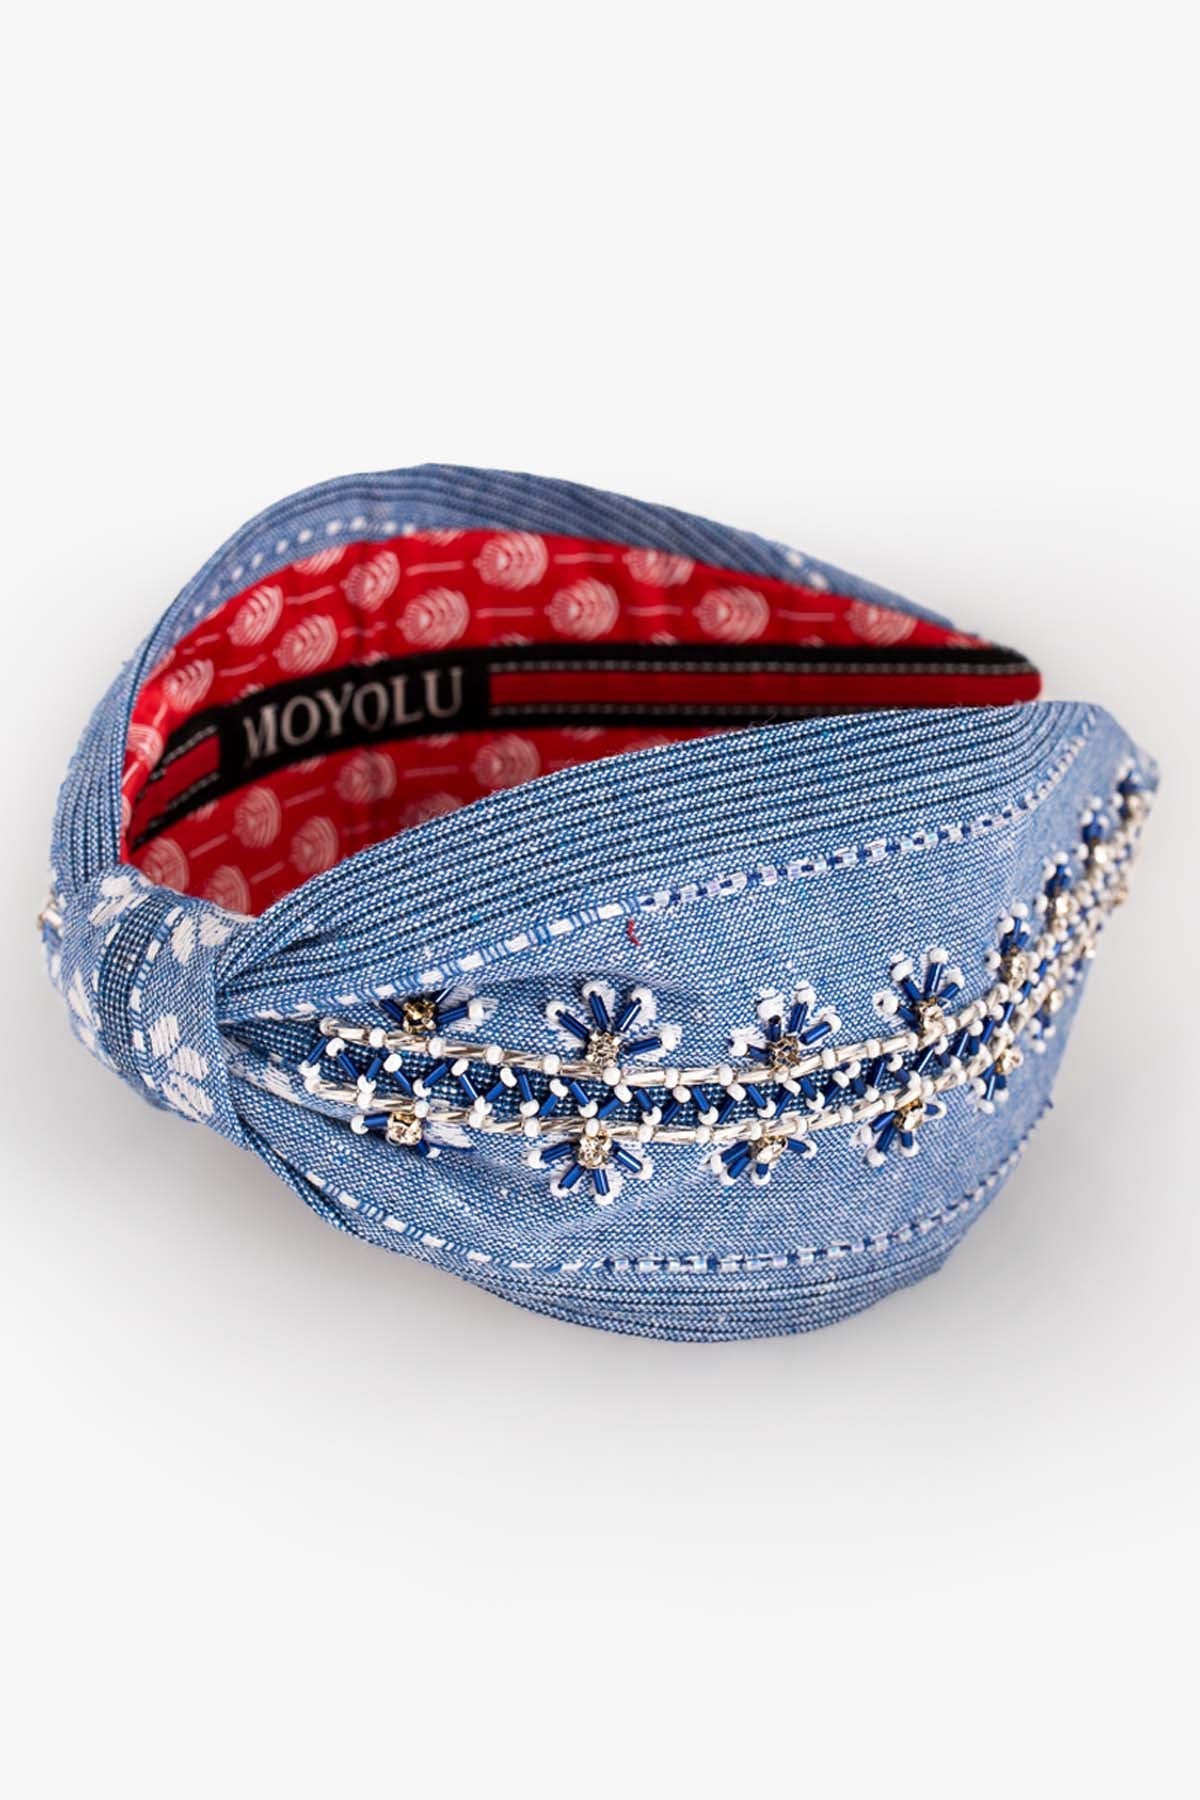 Moyolu Blue Cotton Embellished Headband Accessories online at ScrollnShops